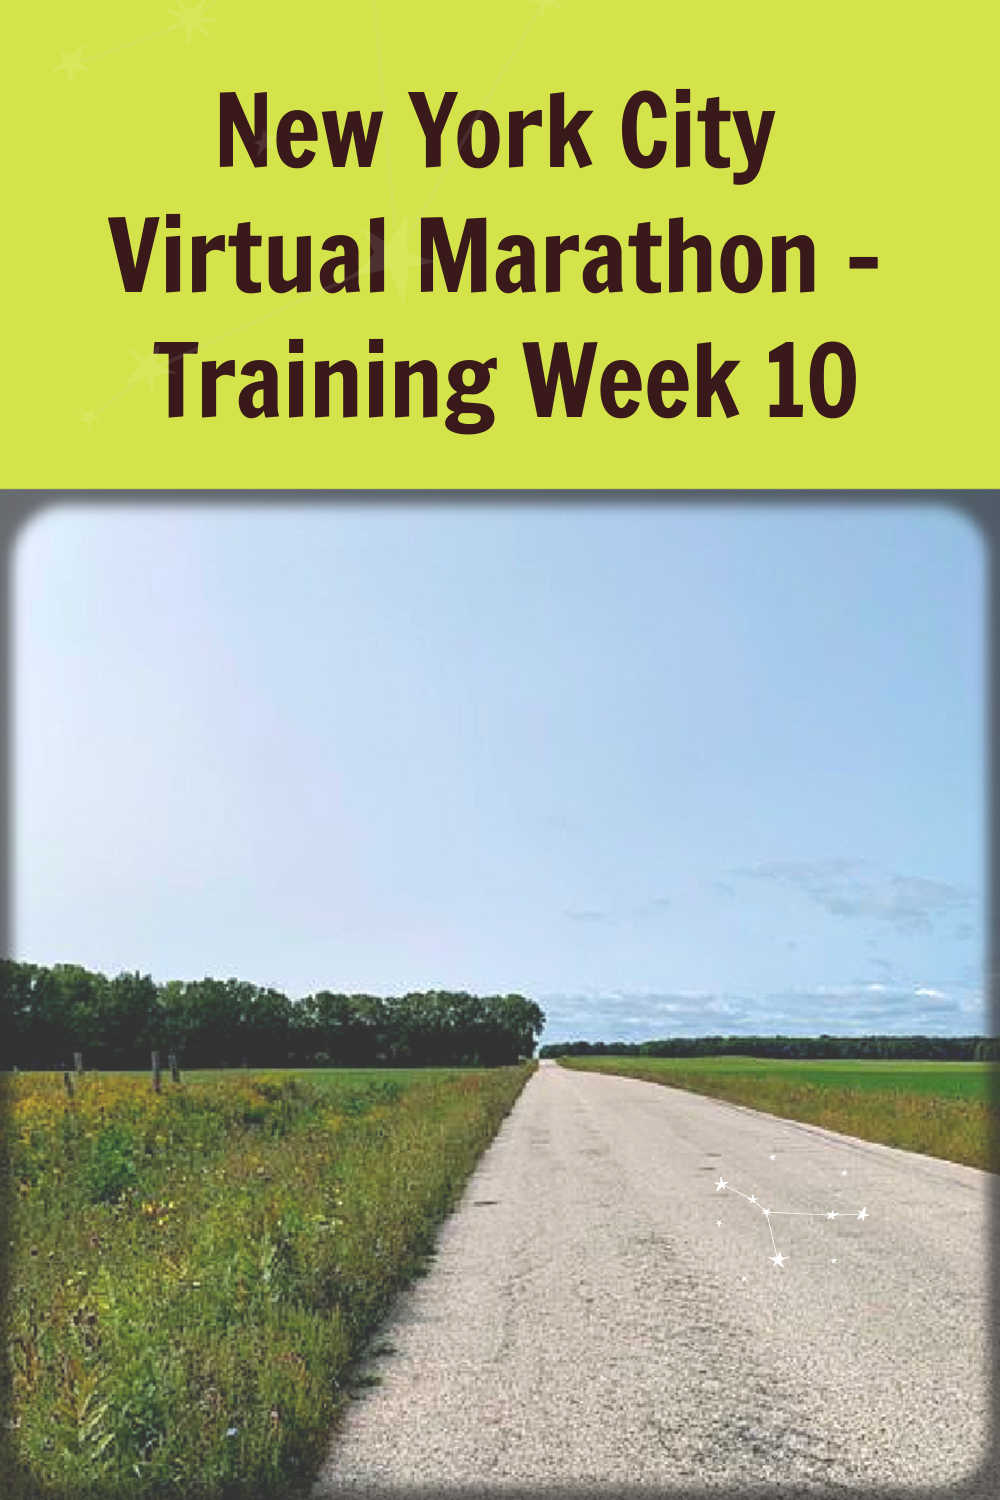 Virtual New York City Marathon - Training Week 10